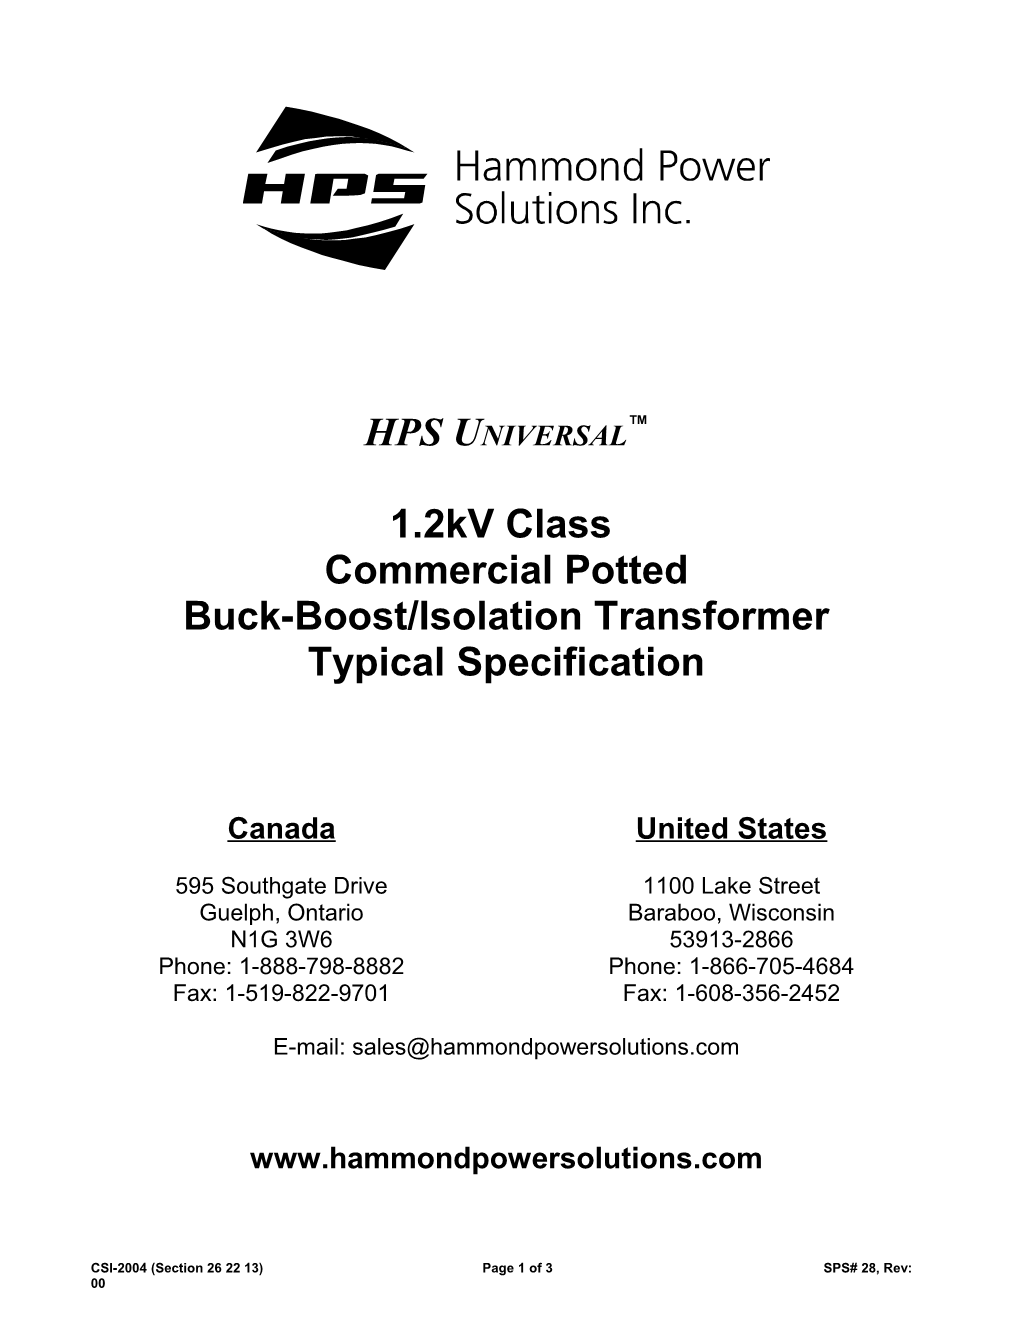 Buck-Boost/Isolation Transformer